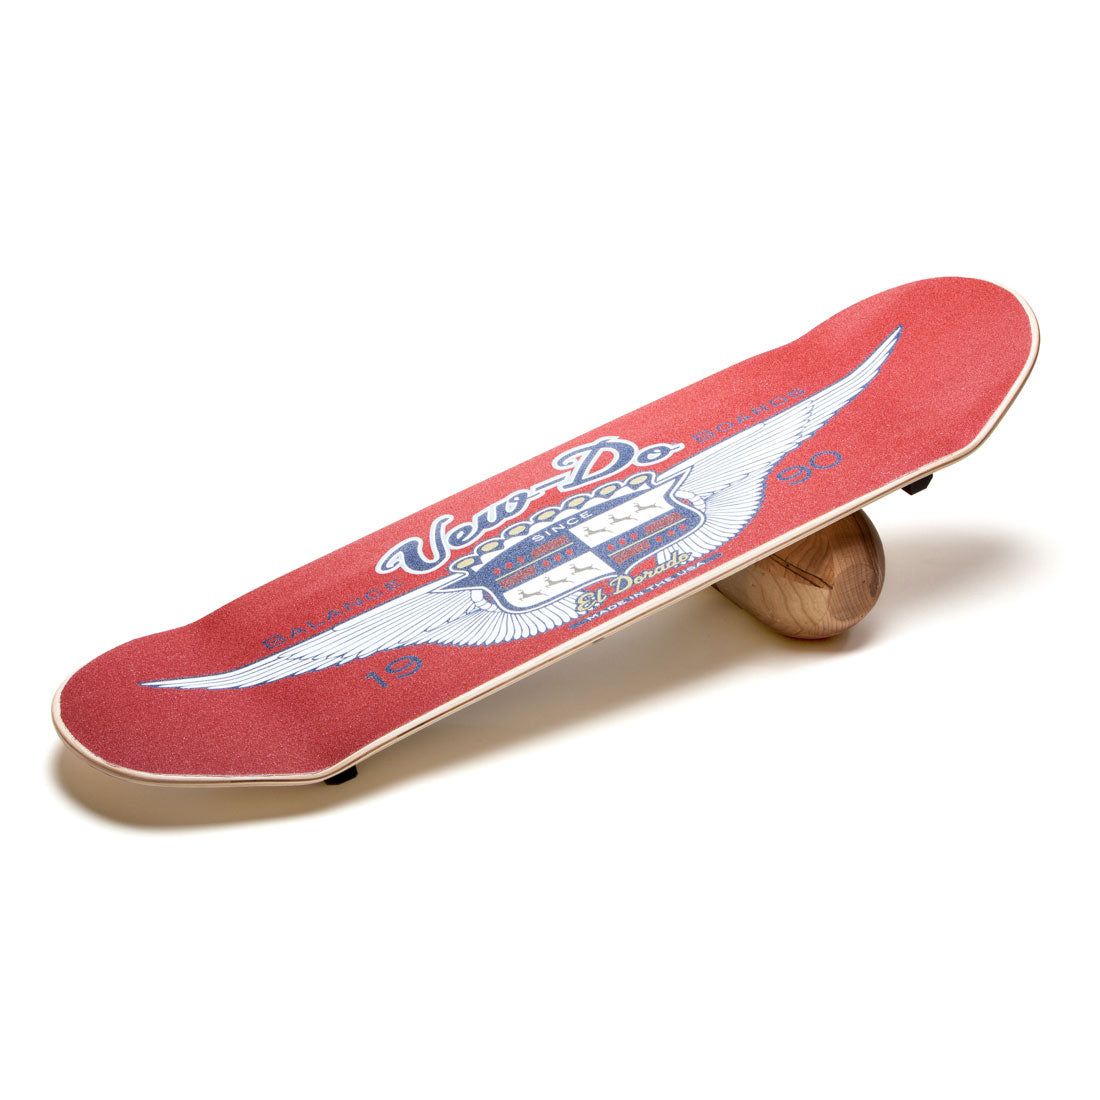 Vew-Do El Dorado Balance Board - Red Other Fun Toys